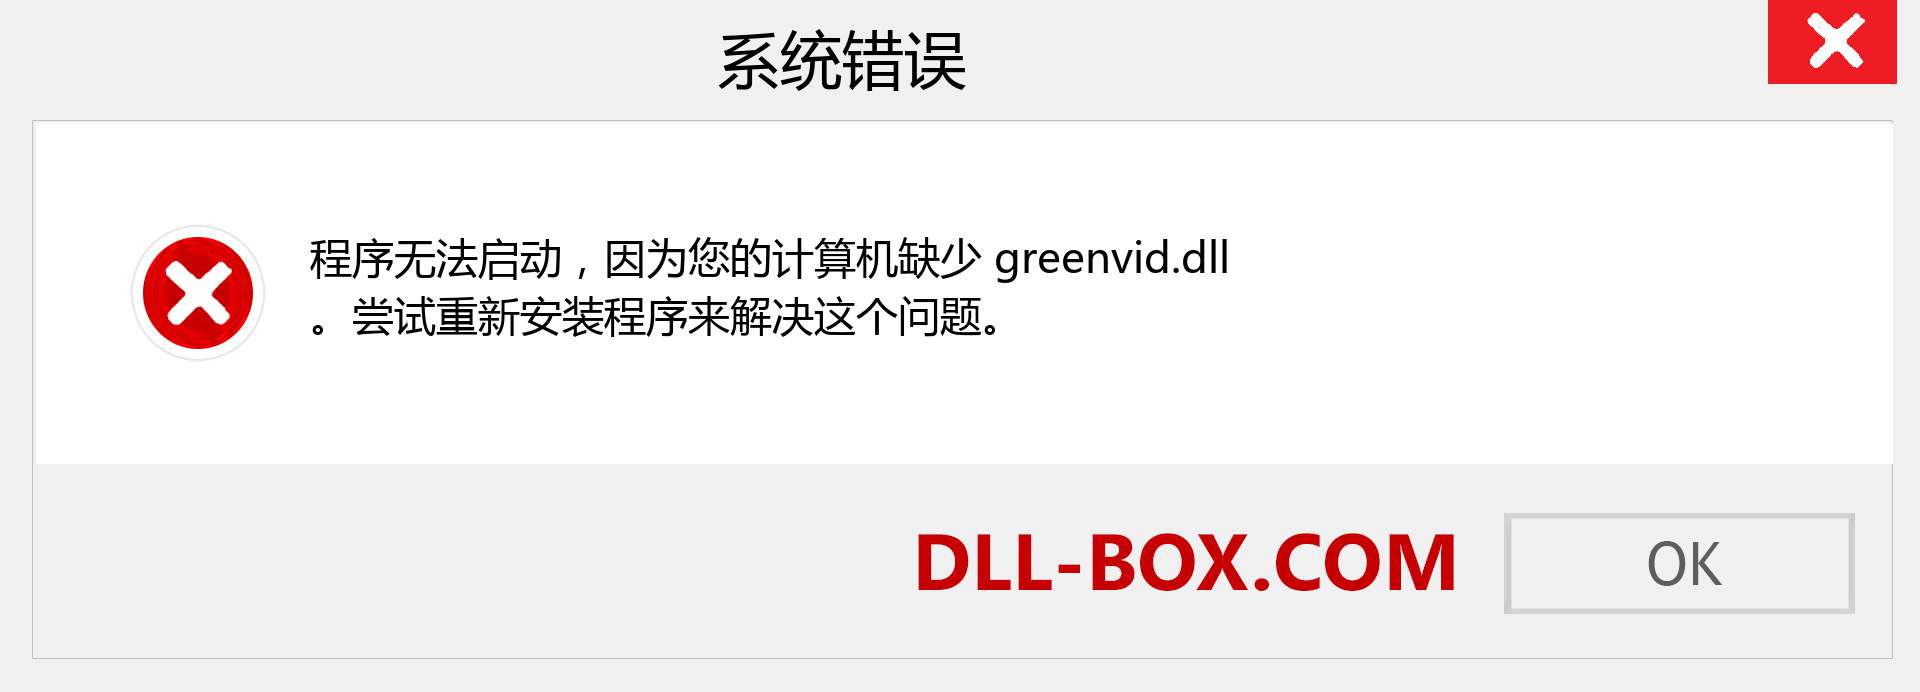 greenvid.dll 文件丢失？。 适用于 Windows 7、8、10 的下载 - 修复 Windows、照片、图像上的 greenvid dll 丢失错误